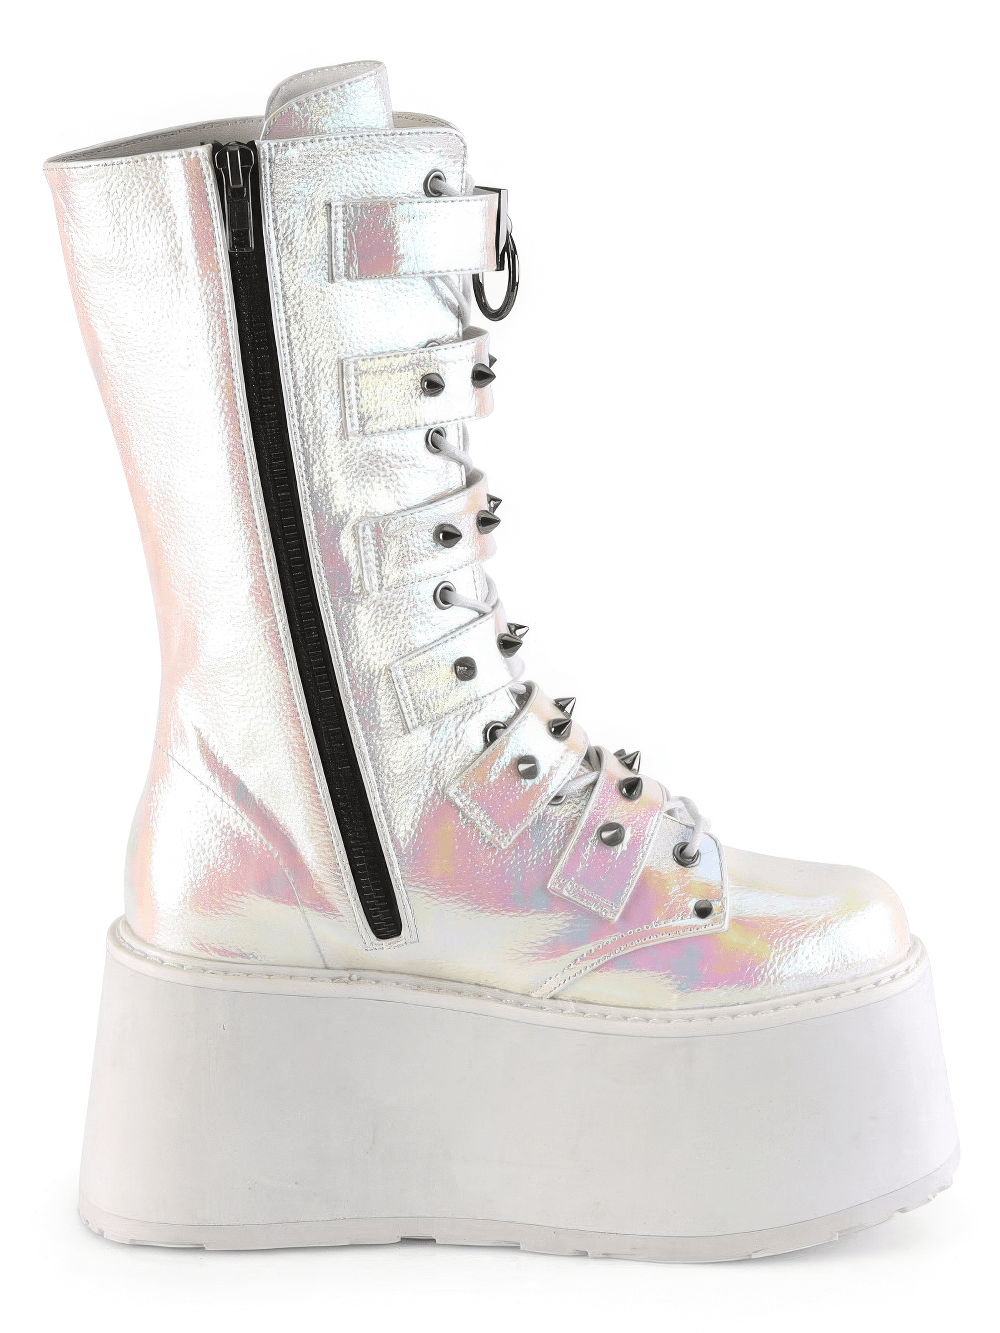 DEMONIA Pink-White Iridescent Platform Mid-Calf Boots